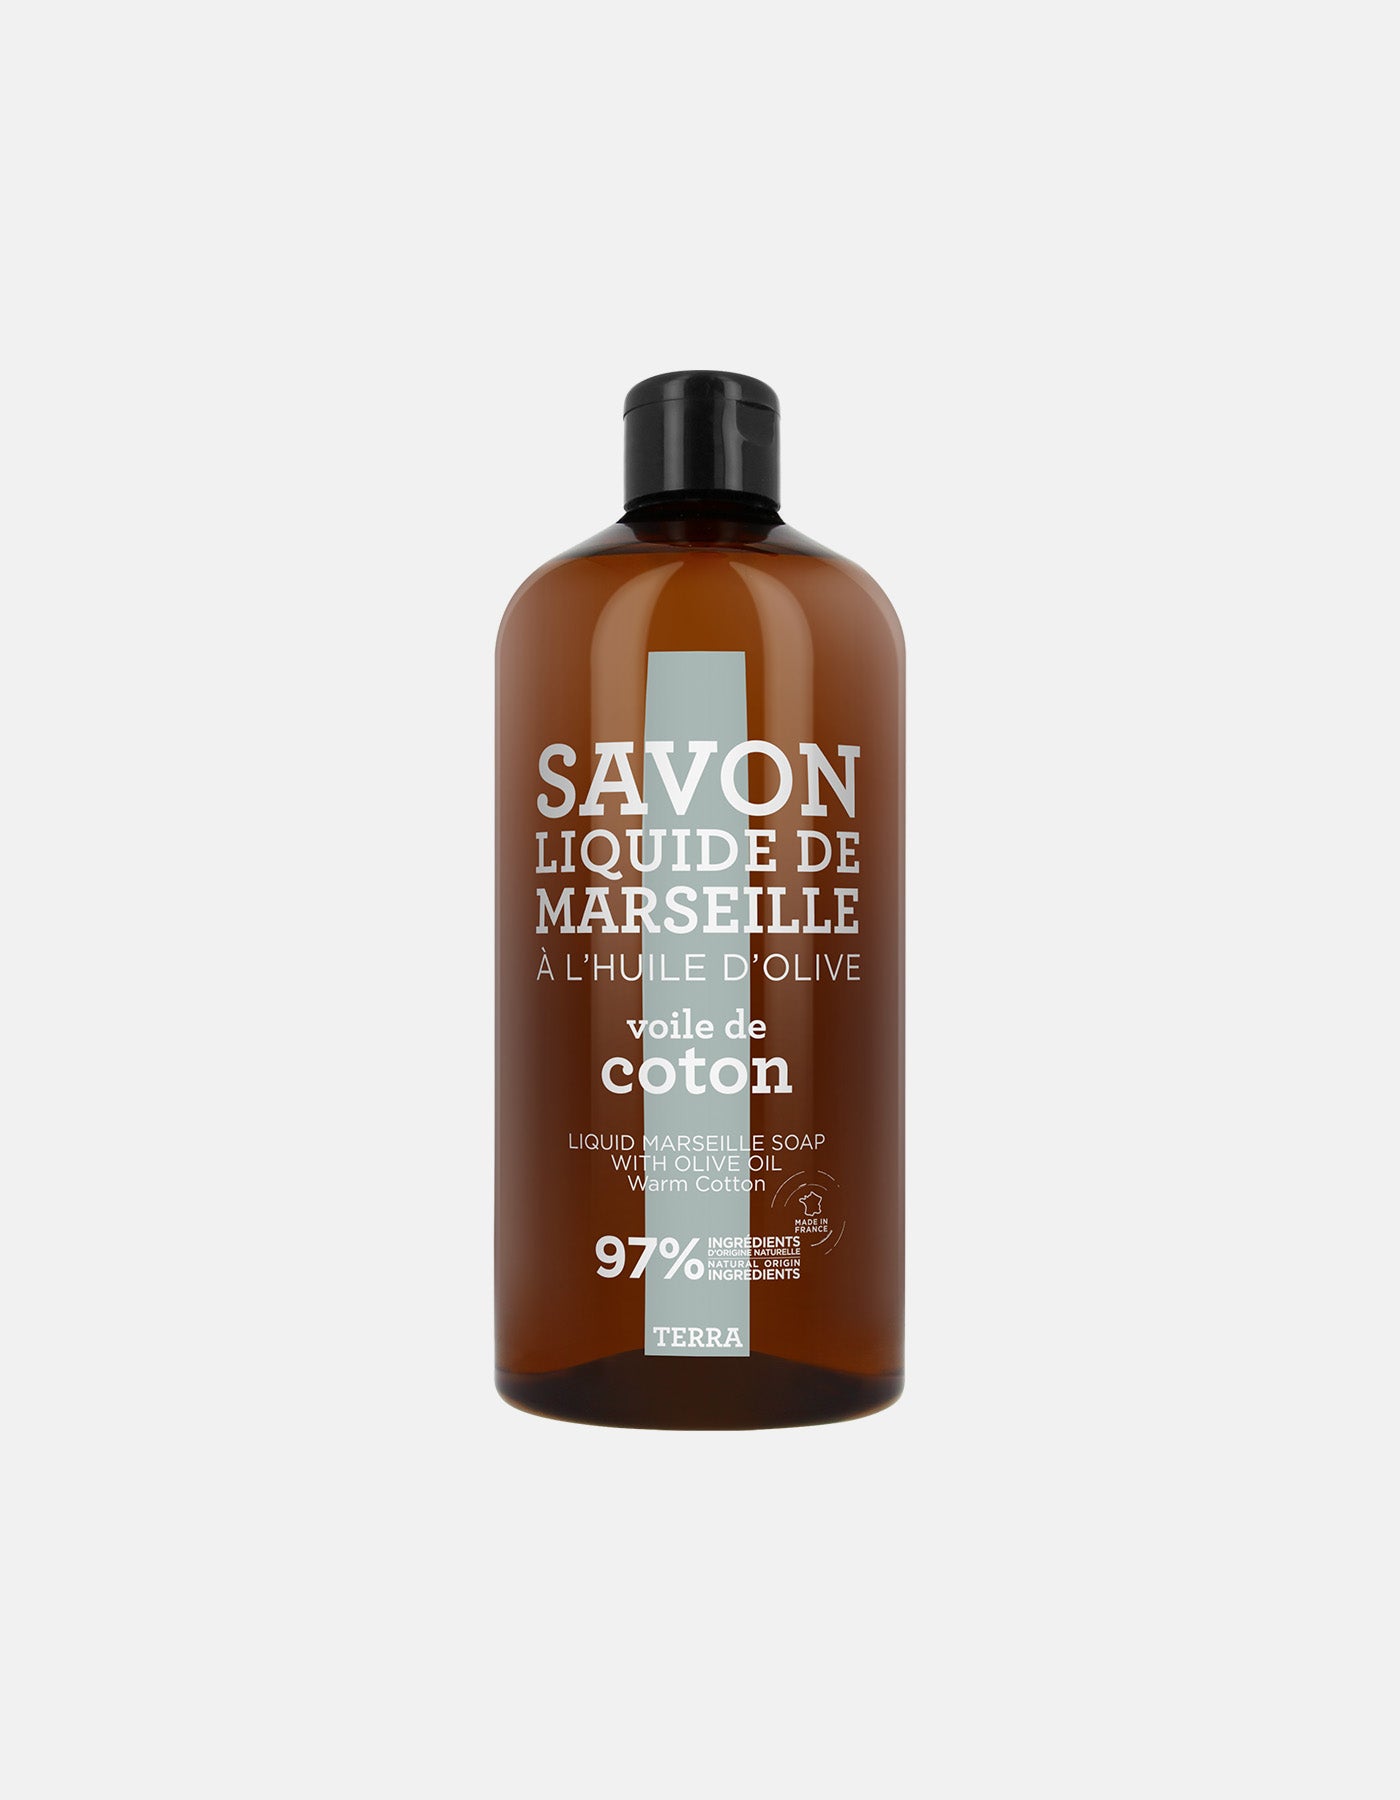 Liquid Soap Refill 1000ml Warm Cotton Savon de Marseille